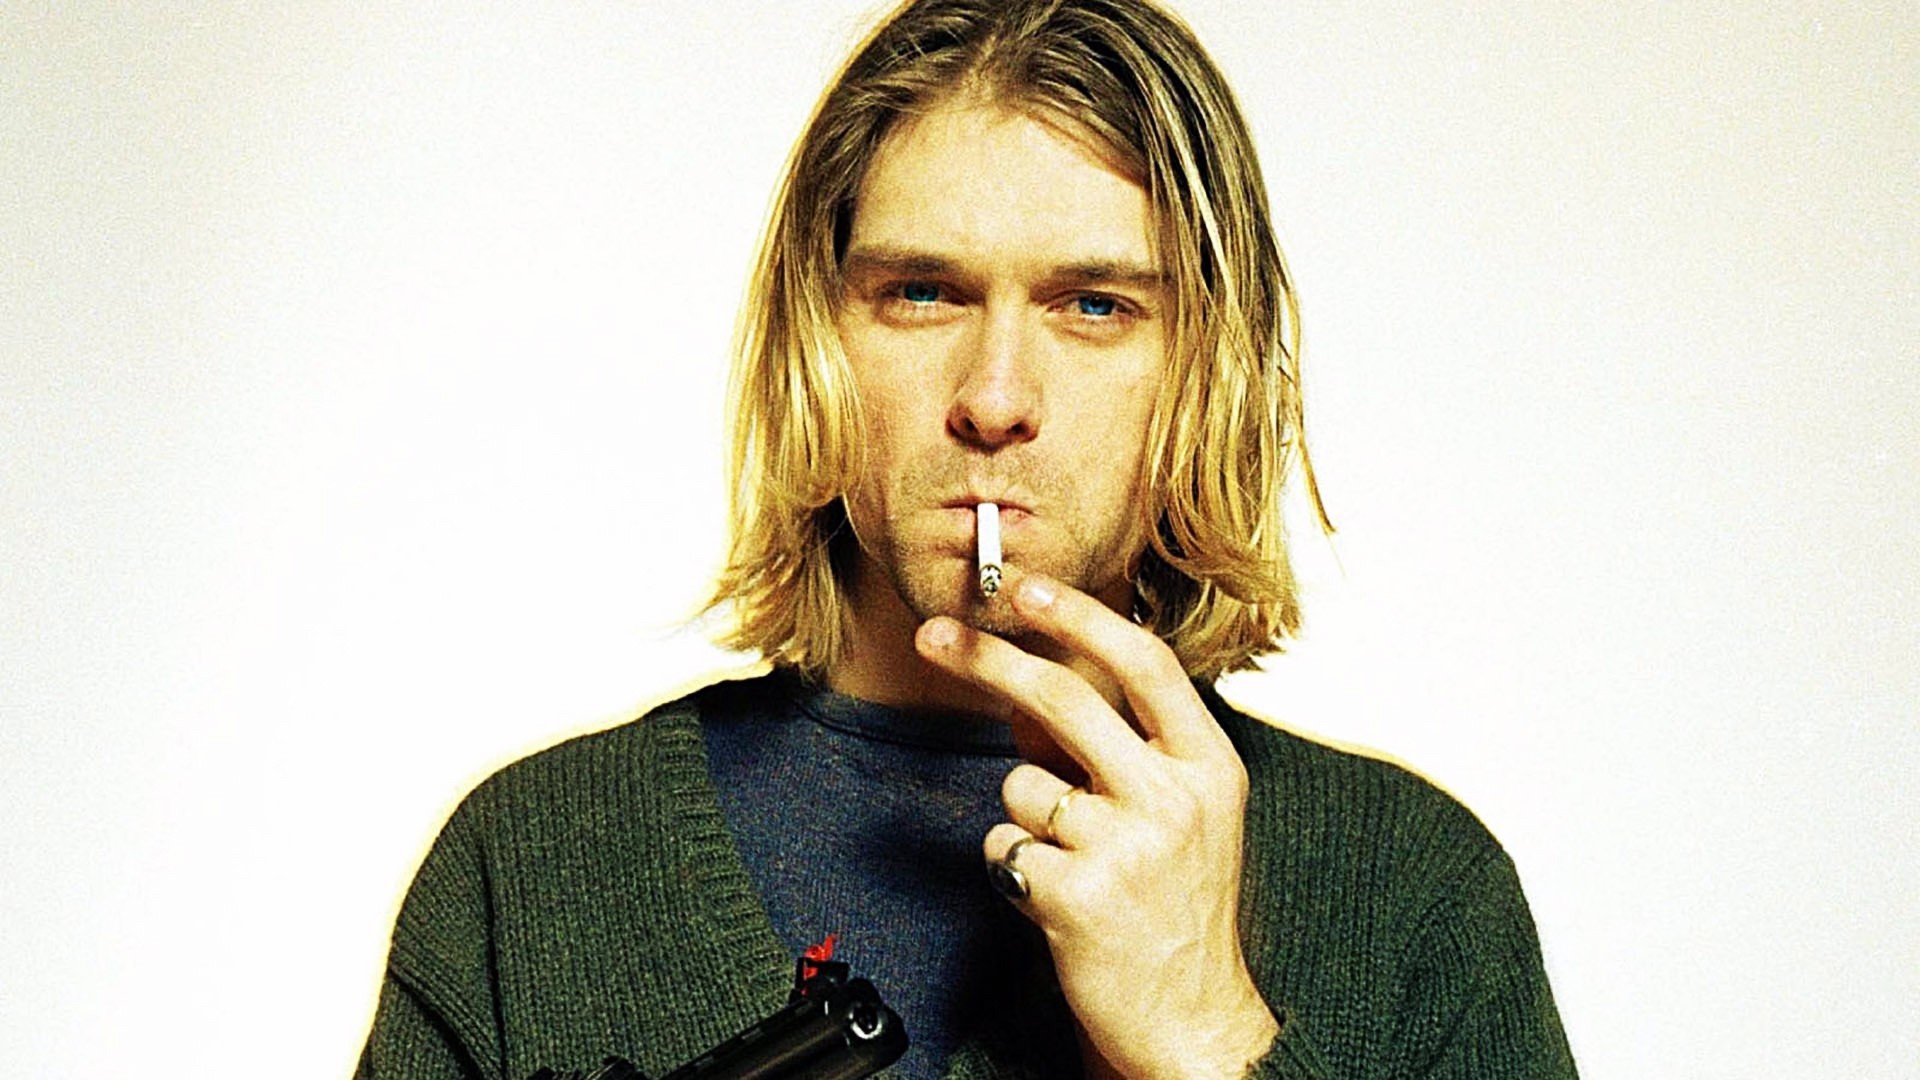 Awesome Kurt Cobain free wallpaper ID:340575 for full hd 1080p computer